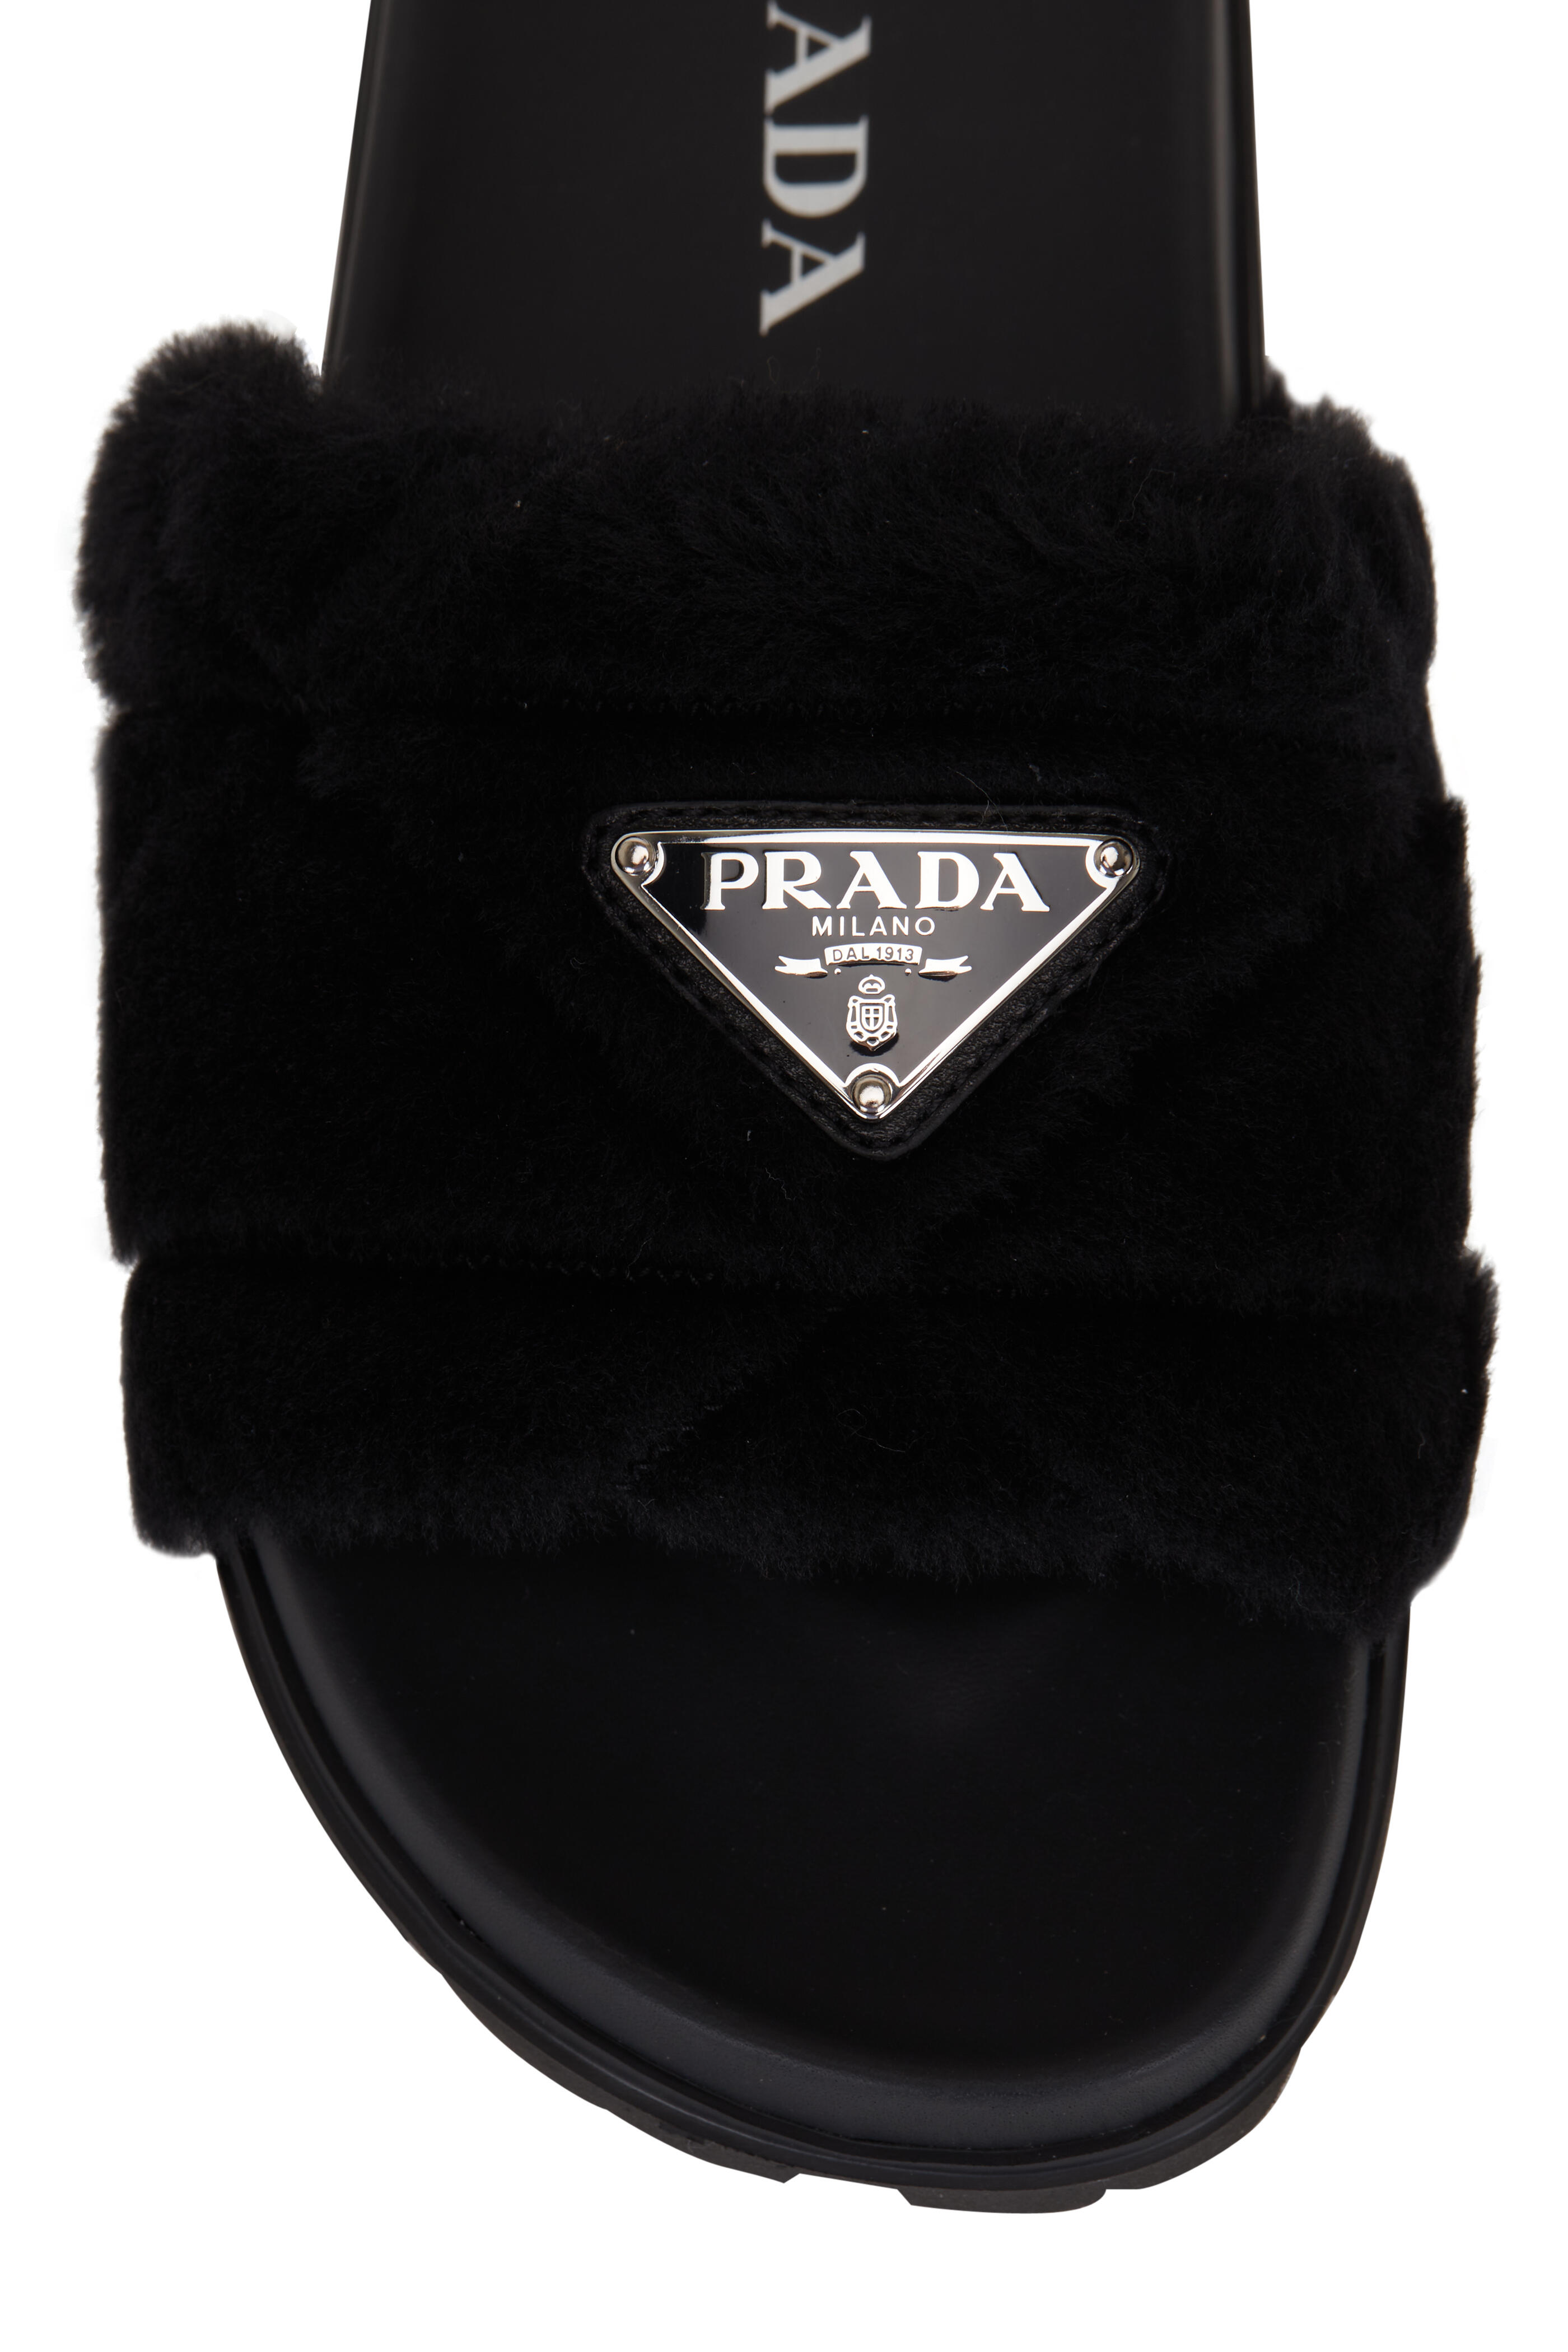 Prada - Black Shearling Pool Slide | Mitchell Stores